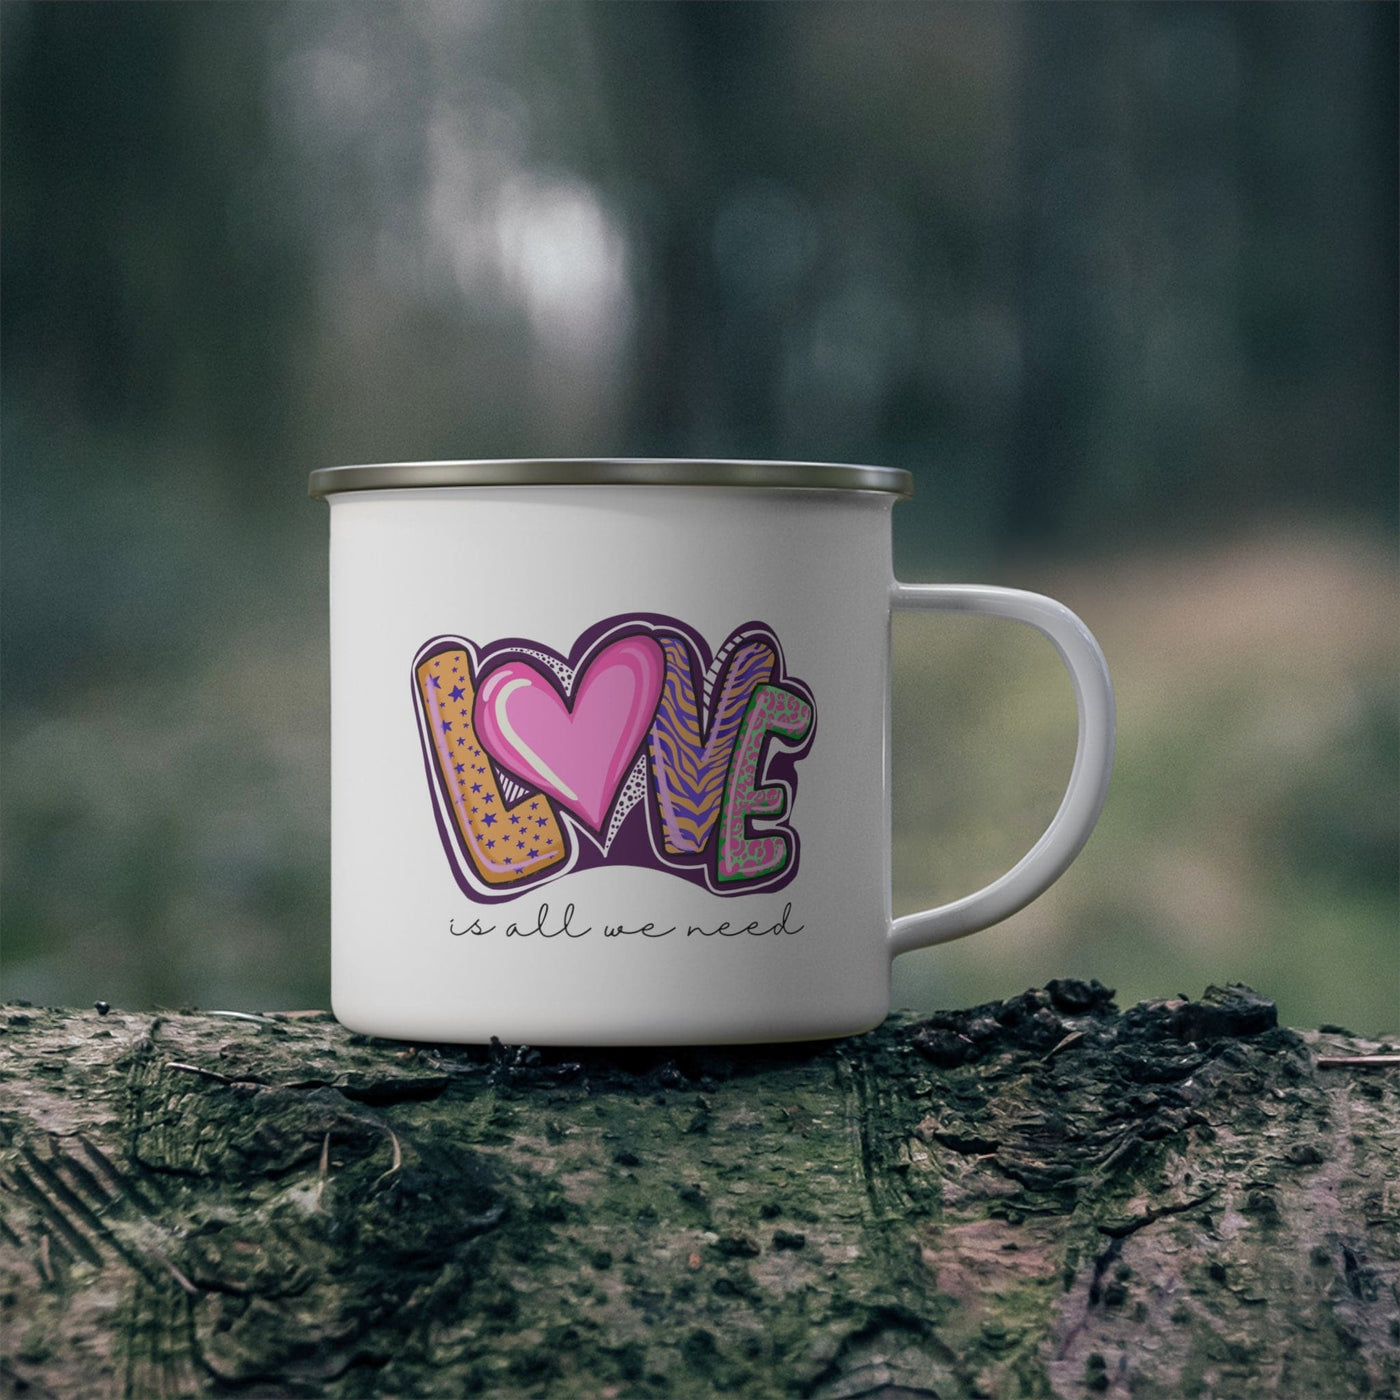 Enamel Camping Mug Say It Soul - Love Is All We Need Decorative | Mugs